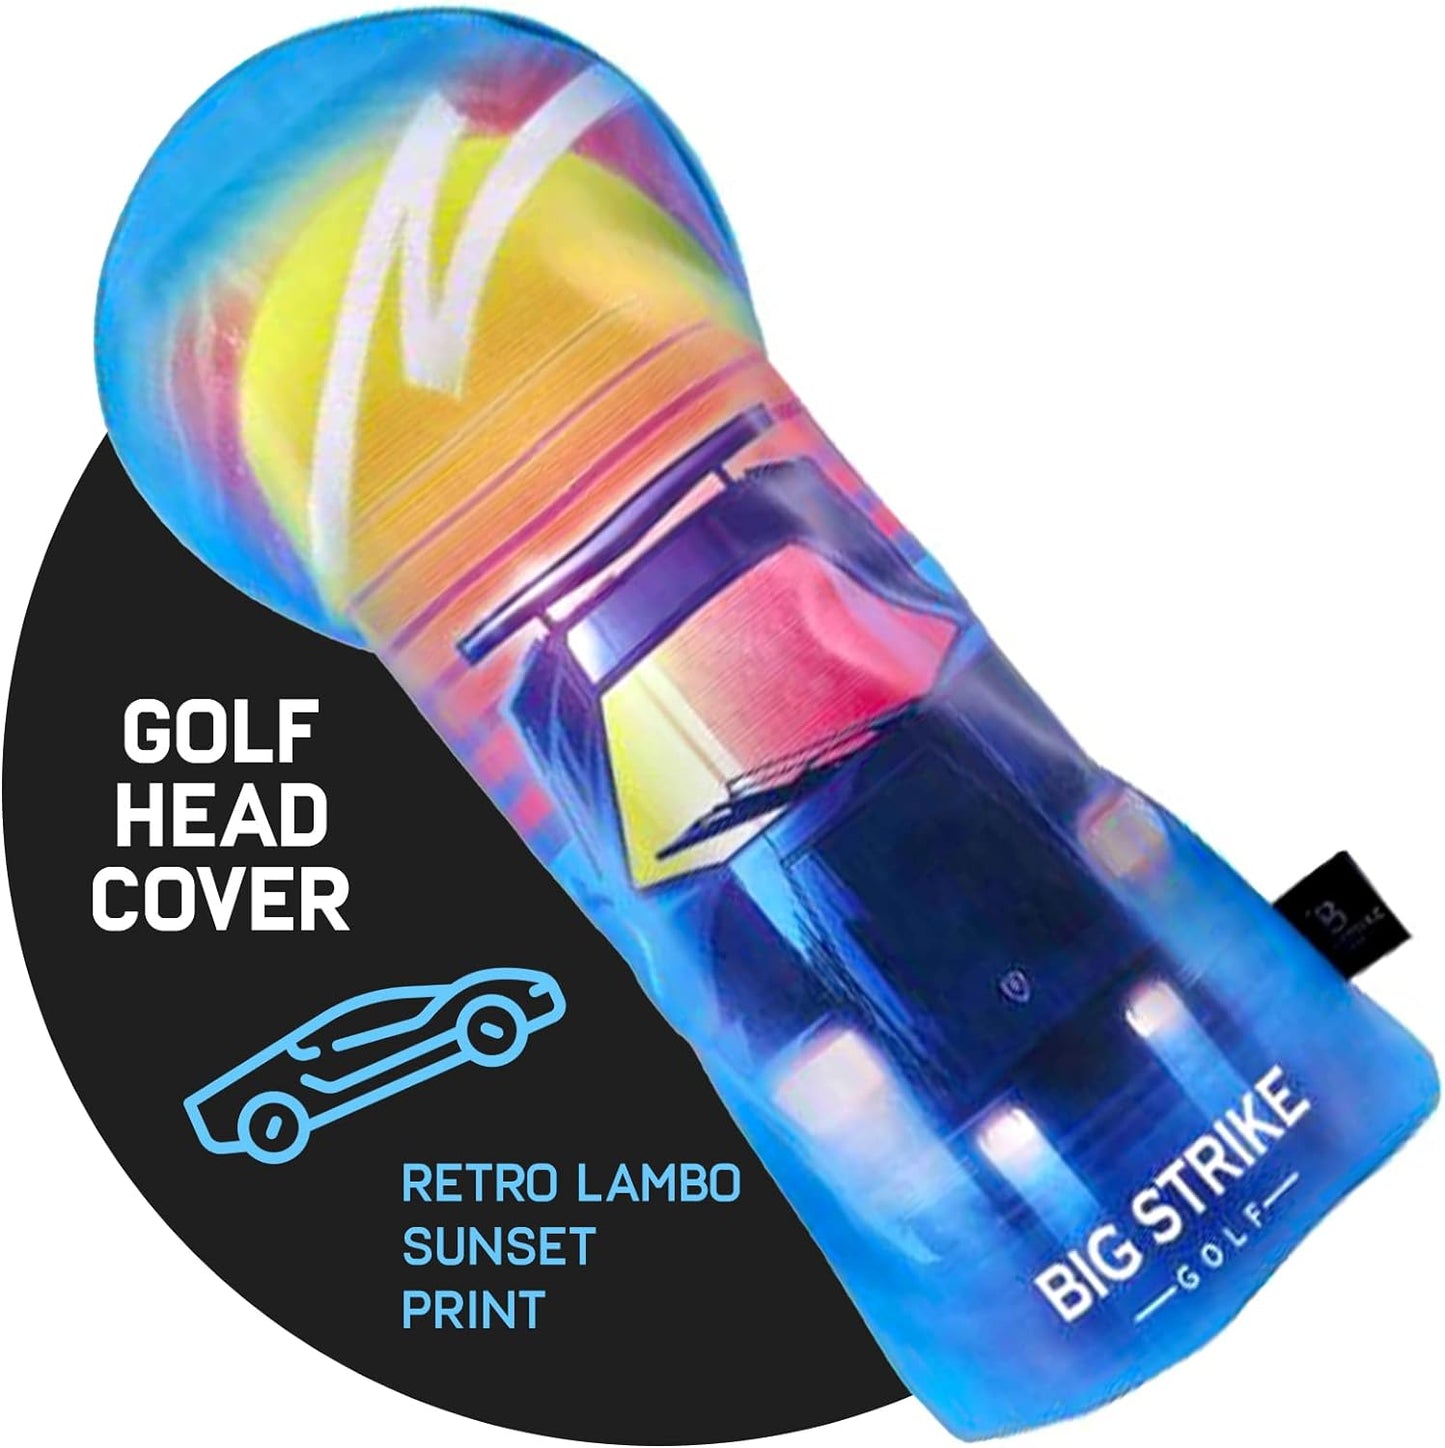 Big Strike Golf - Premium Golf Club Driver Head Covers - Modern Design PU Leather Headcovers (Retro Lambo Sunset)